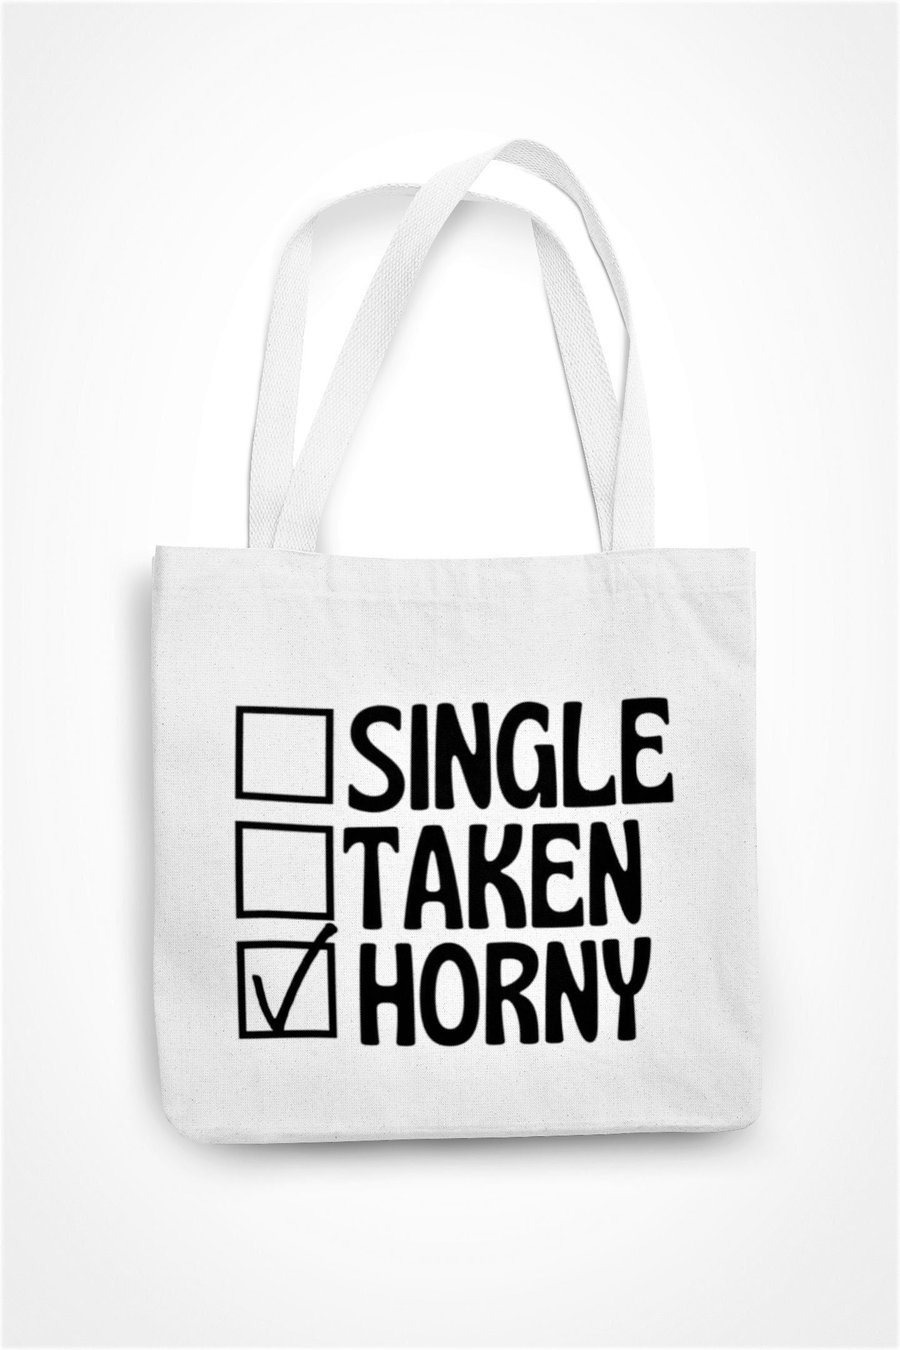 Single Taken Horny Tote Bag Funny Rude Eco Shopping Bag Gift Present